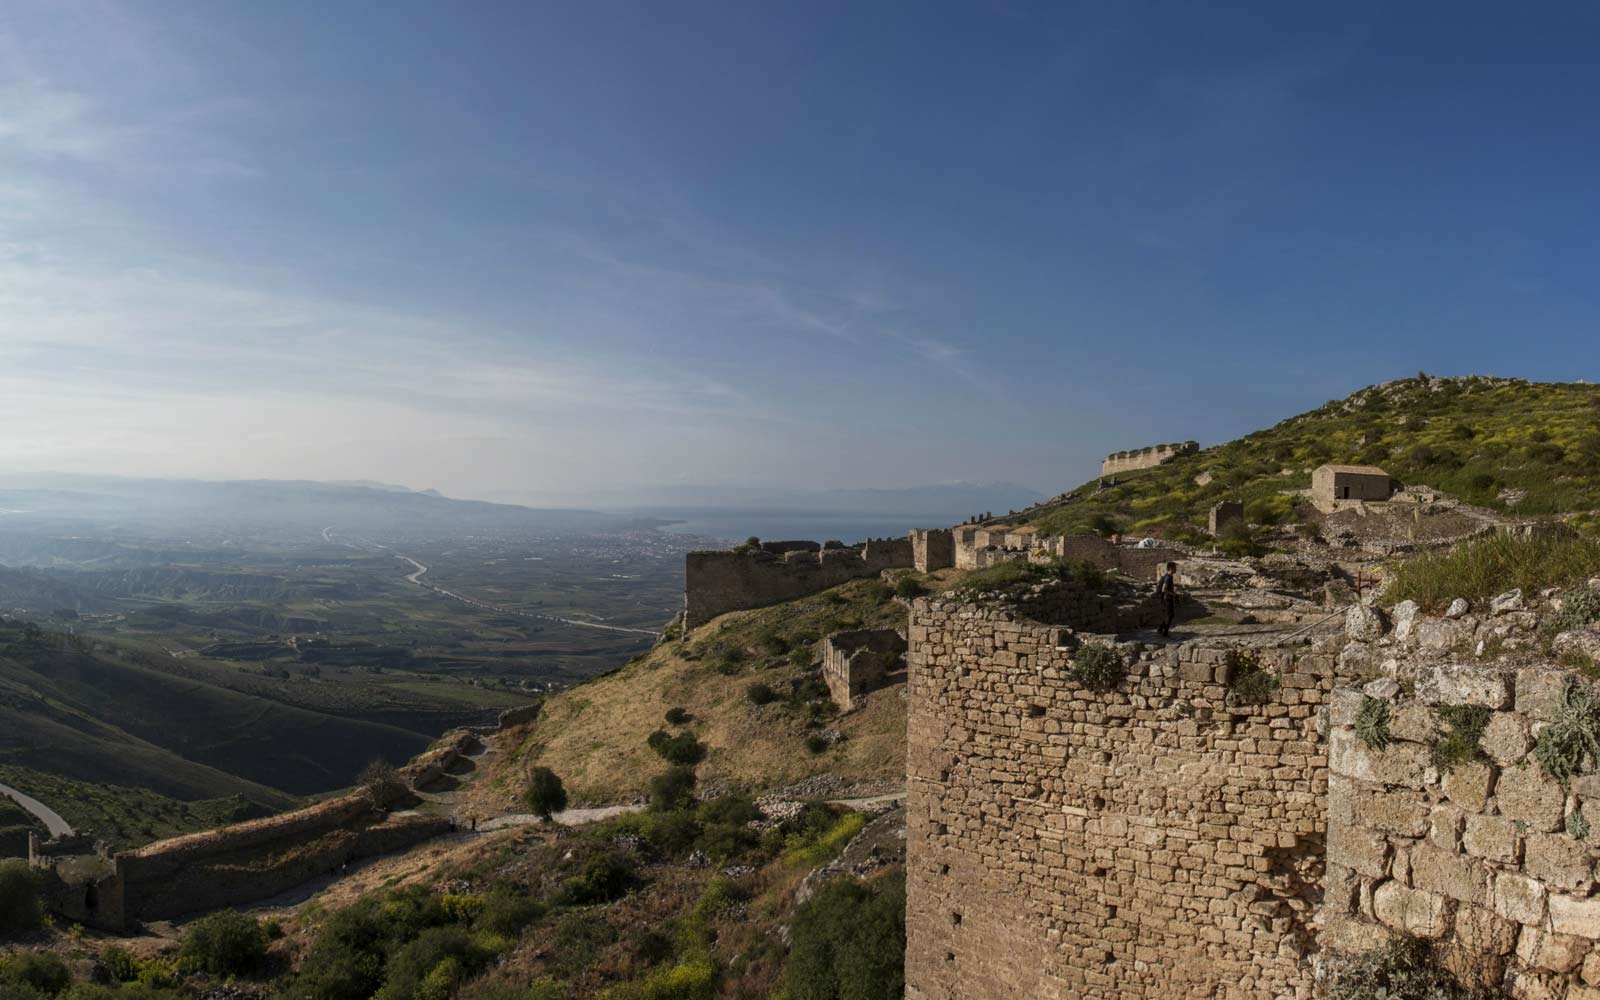 Acrocorinth Castle (11km)